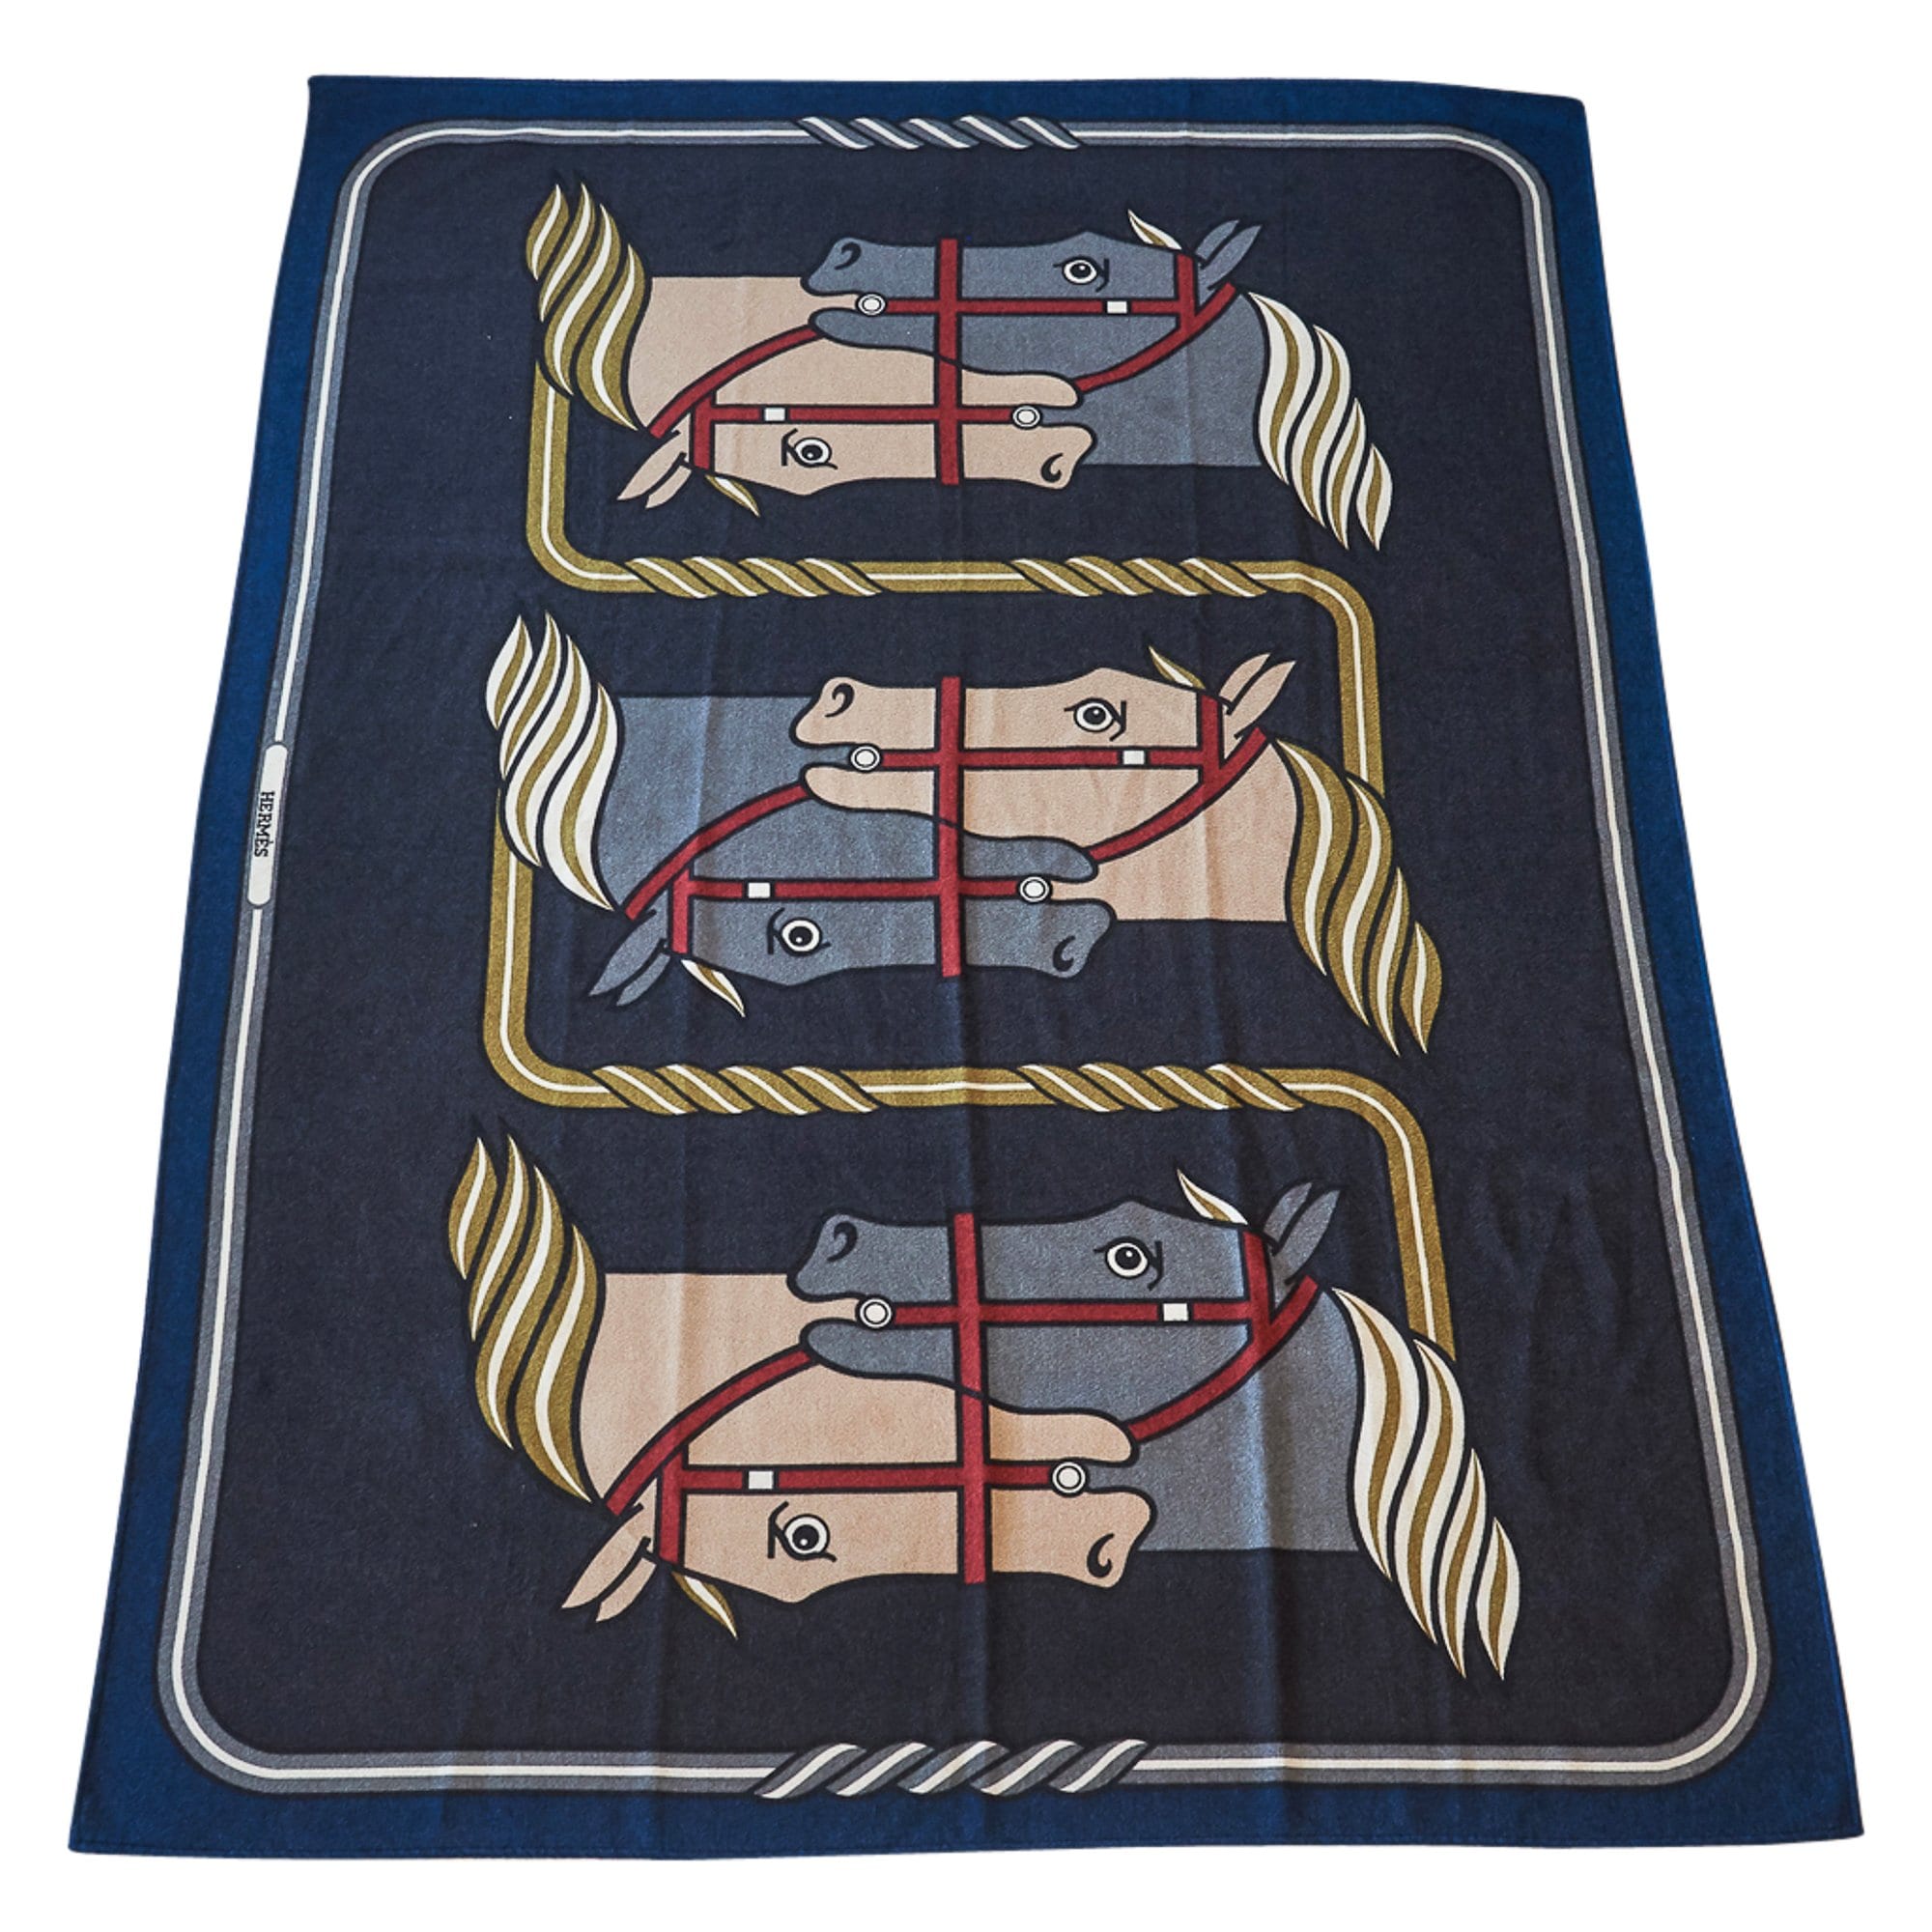 Hermes Blanket Quadrige Limited Edition Blue Rare Find New